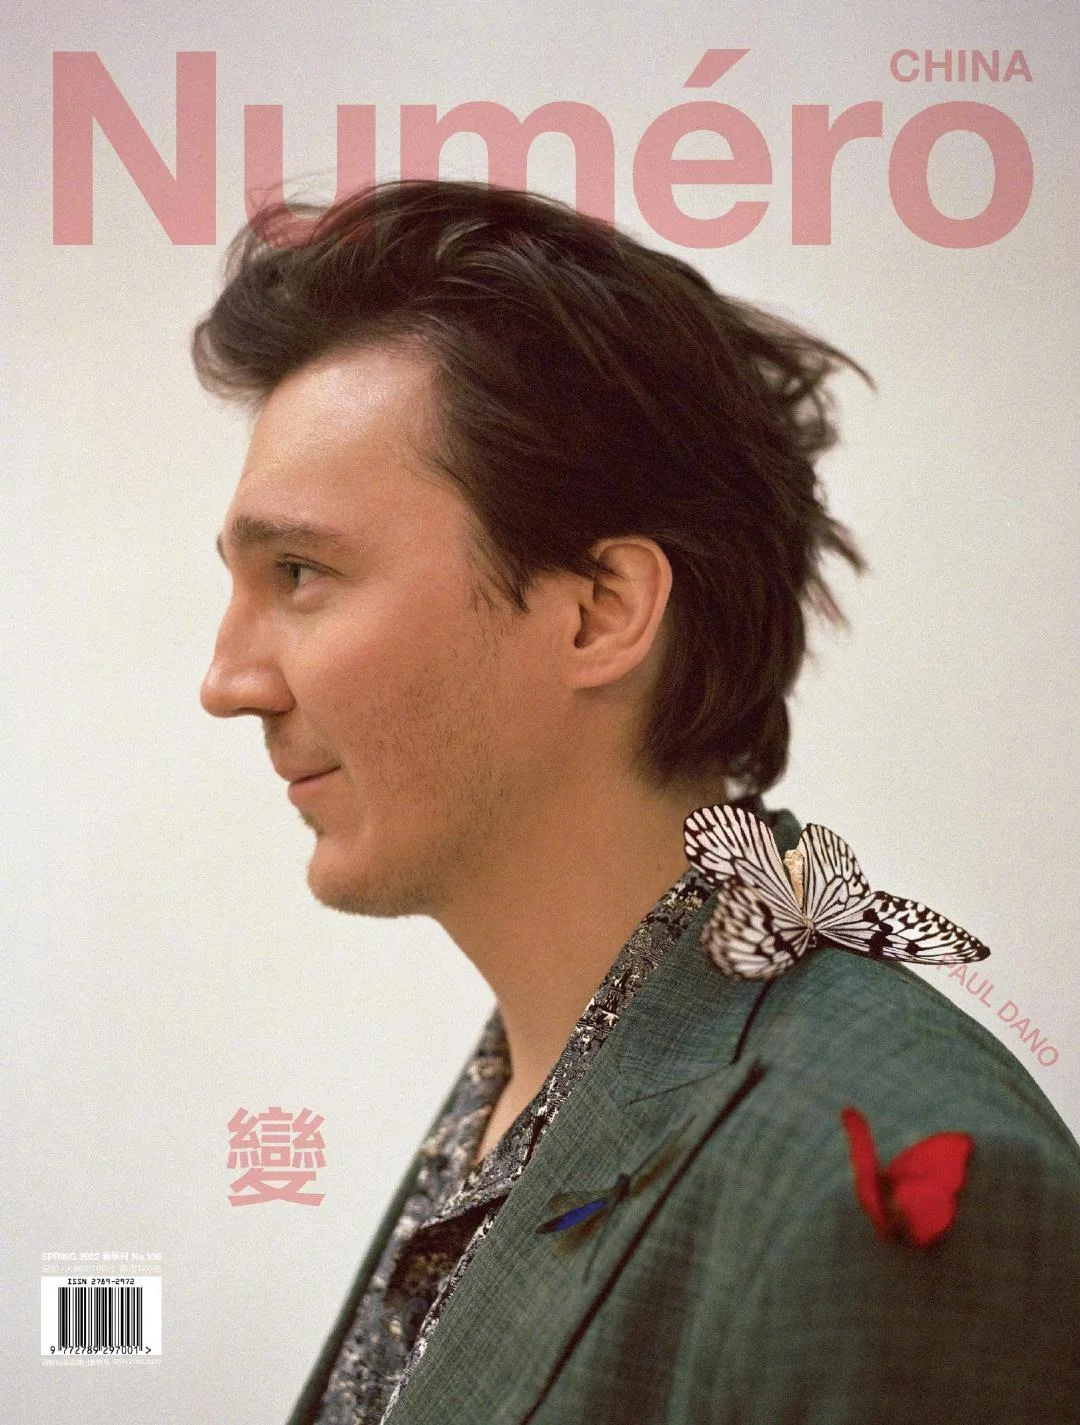 Paul Dano, new photo of "Numero" magazine 